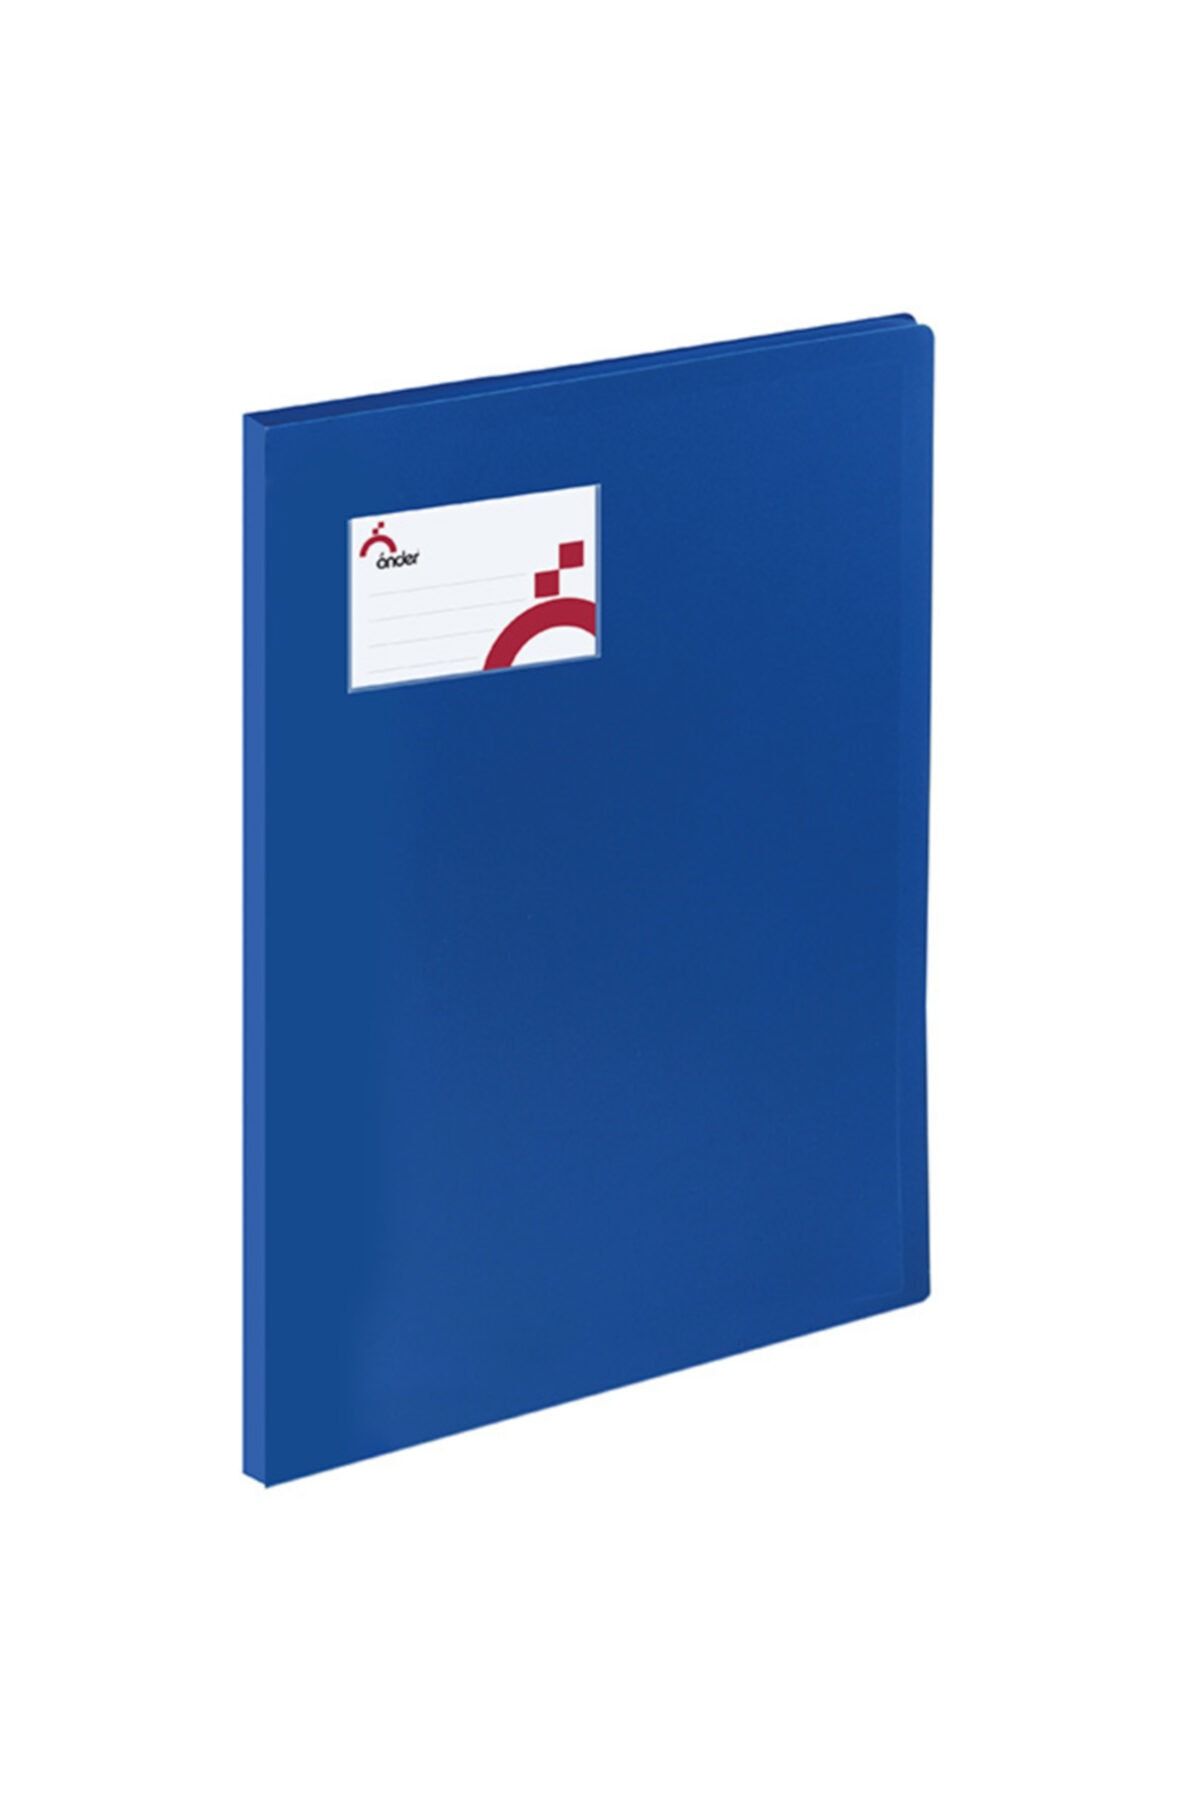 Önder Katalog (sunum) Dosyası Pp A3 20 Li Mavi 1022-1